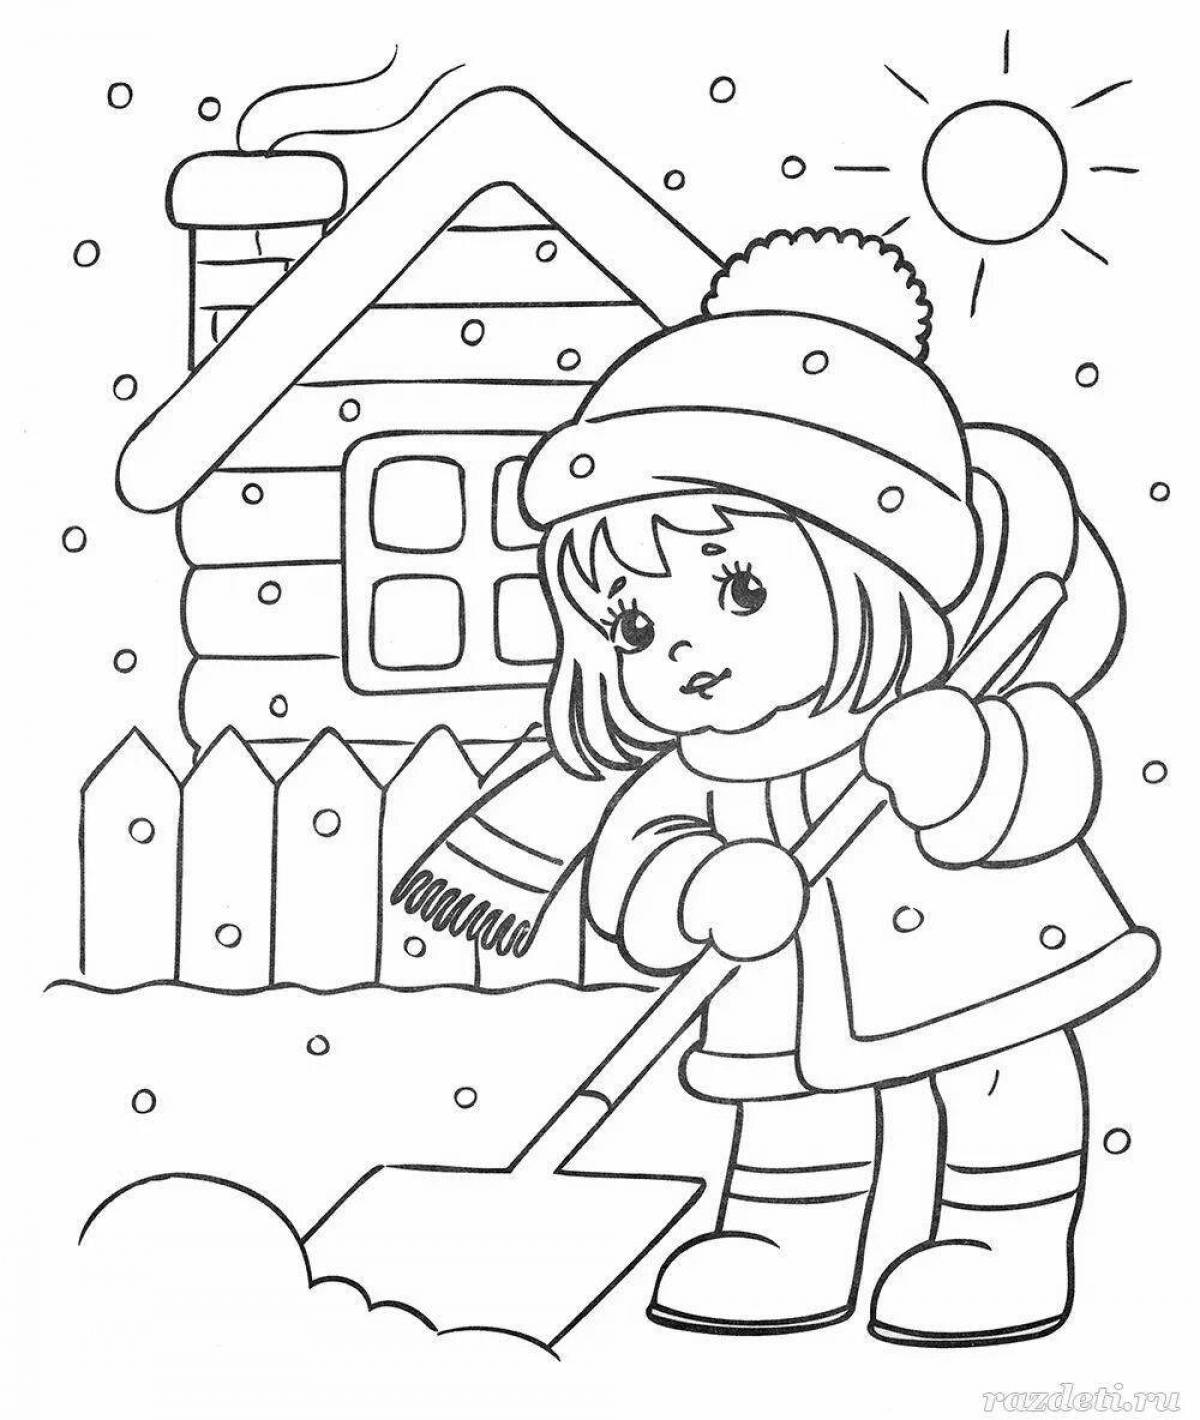 Violent children's winter coloring book